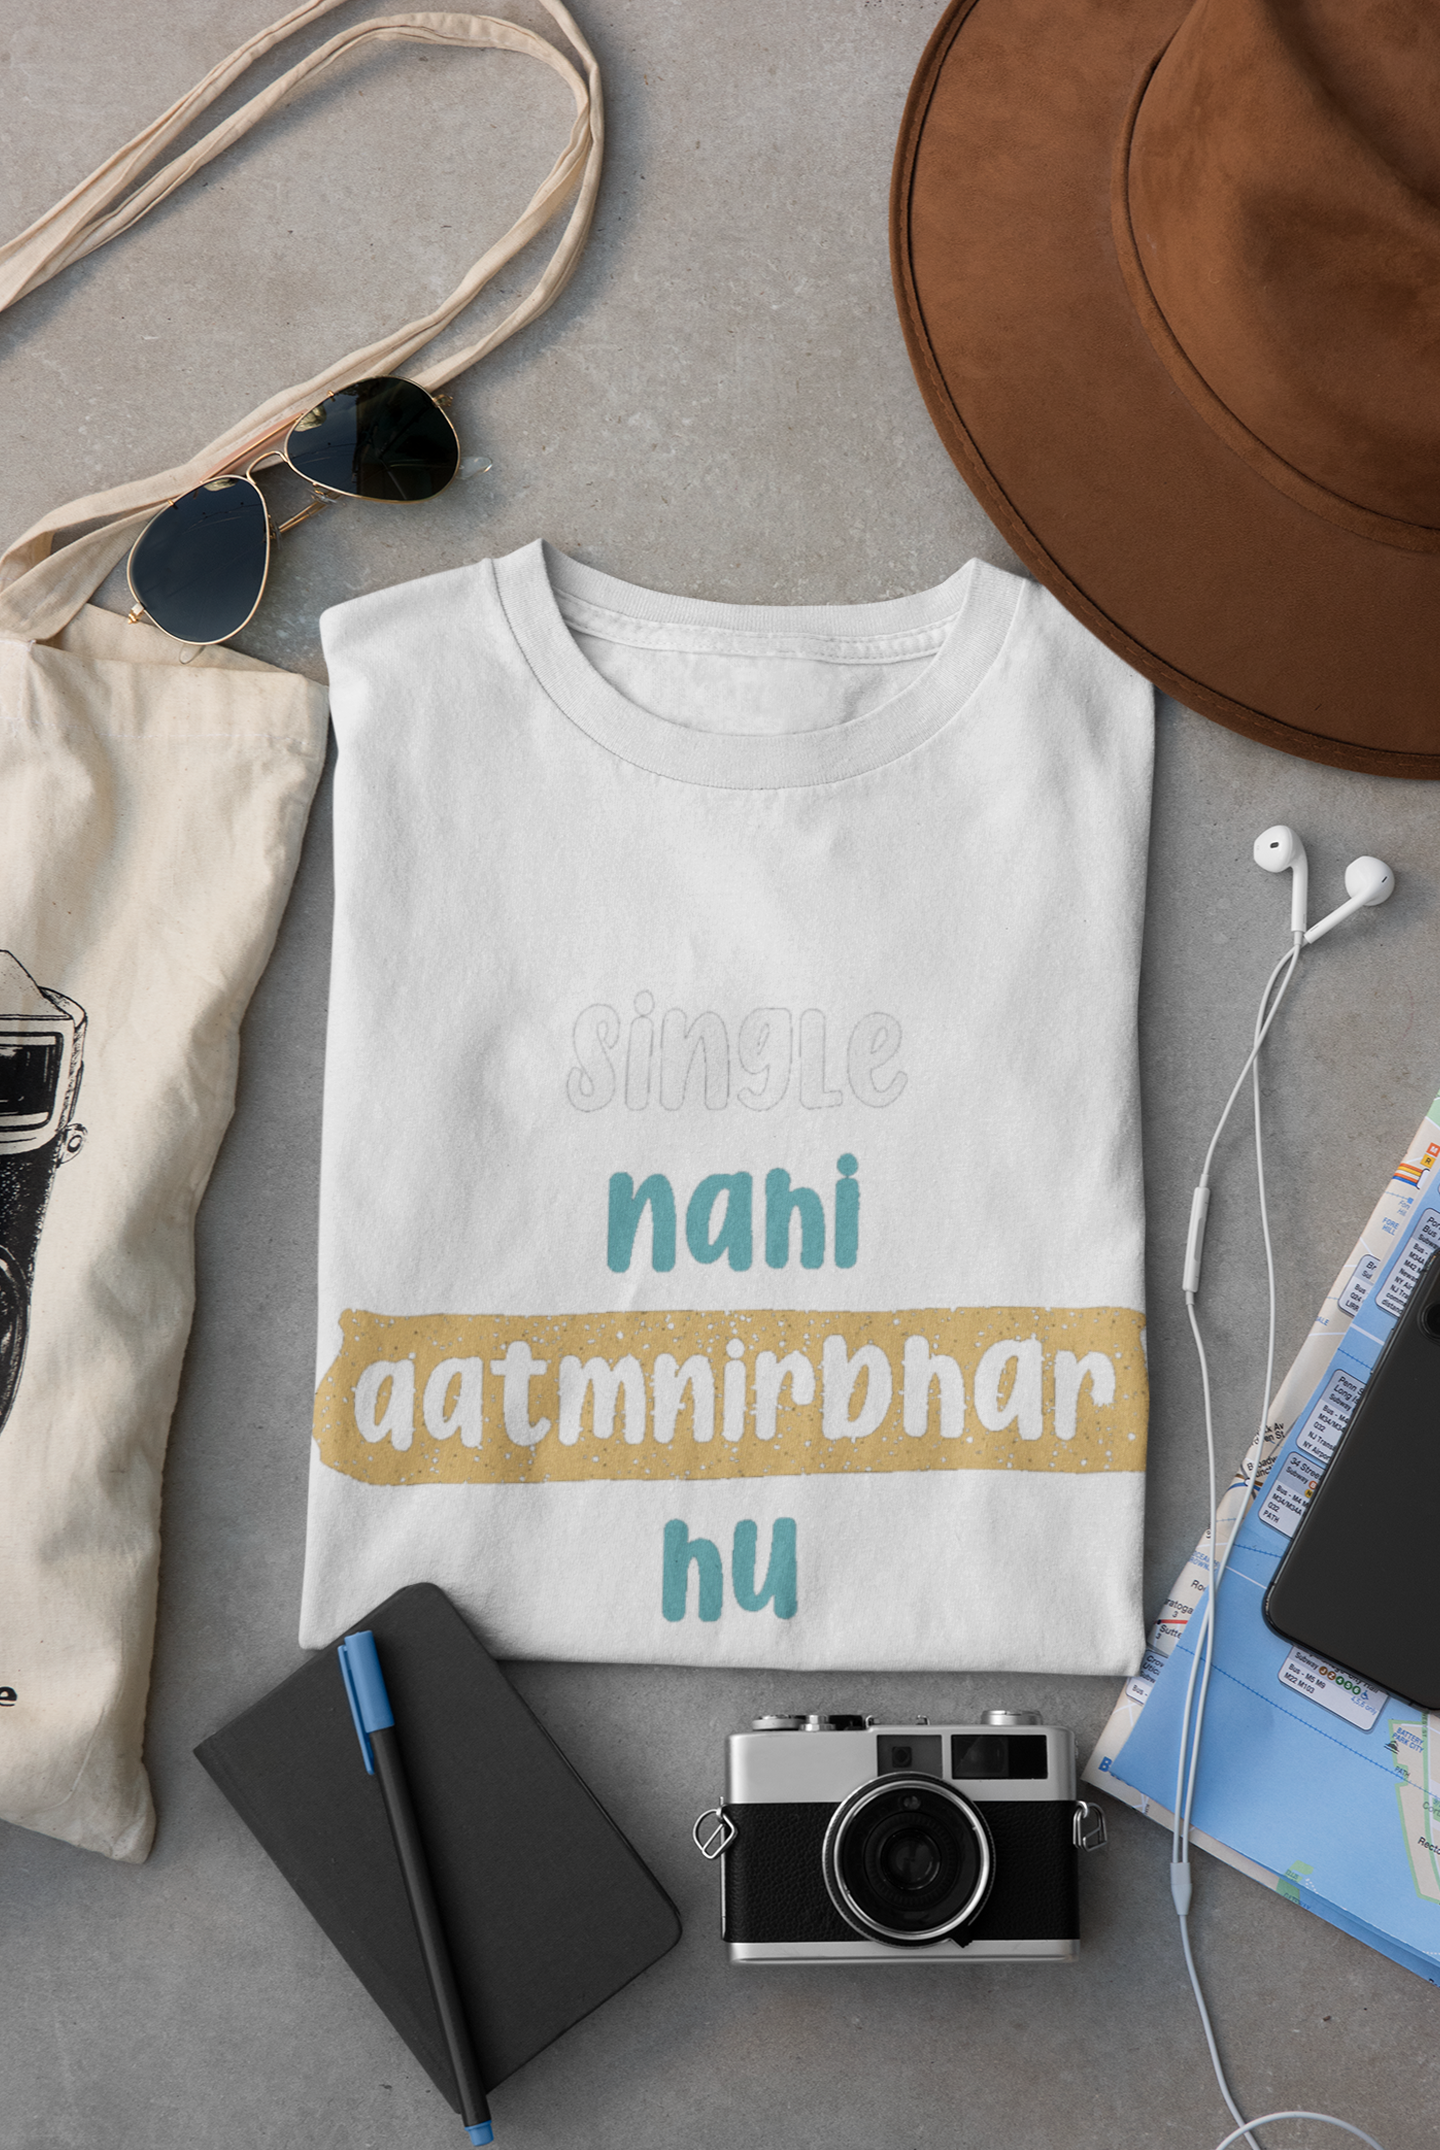 Single Nahi Aatmnirbhar Hu Mens Half Sleeves T-shirt- FunkyTeesClub